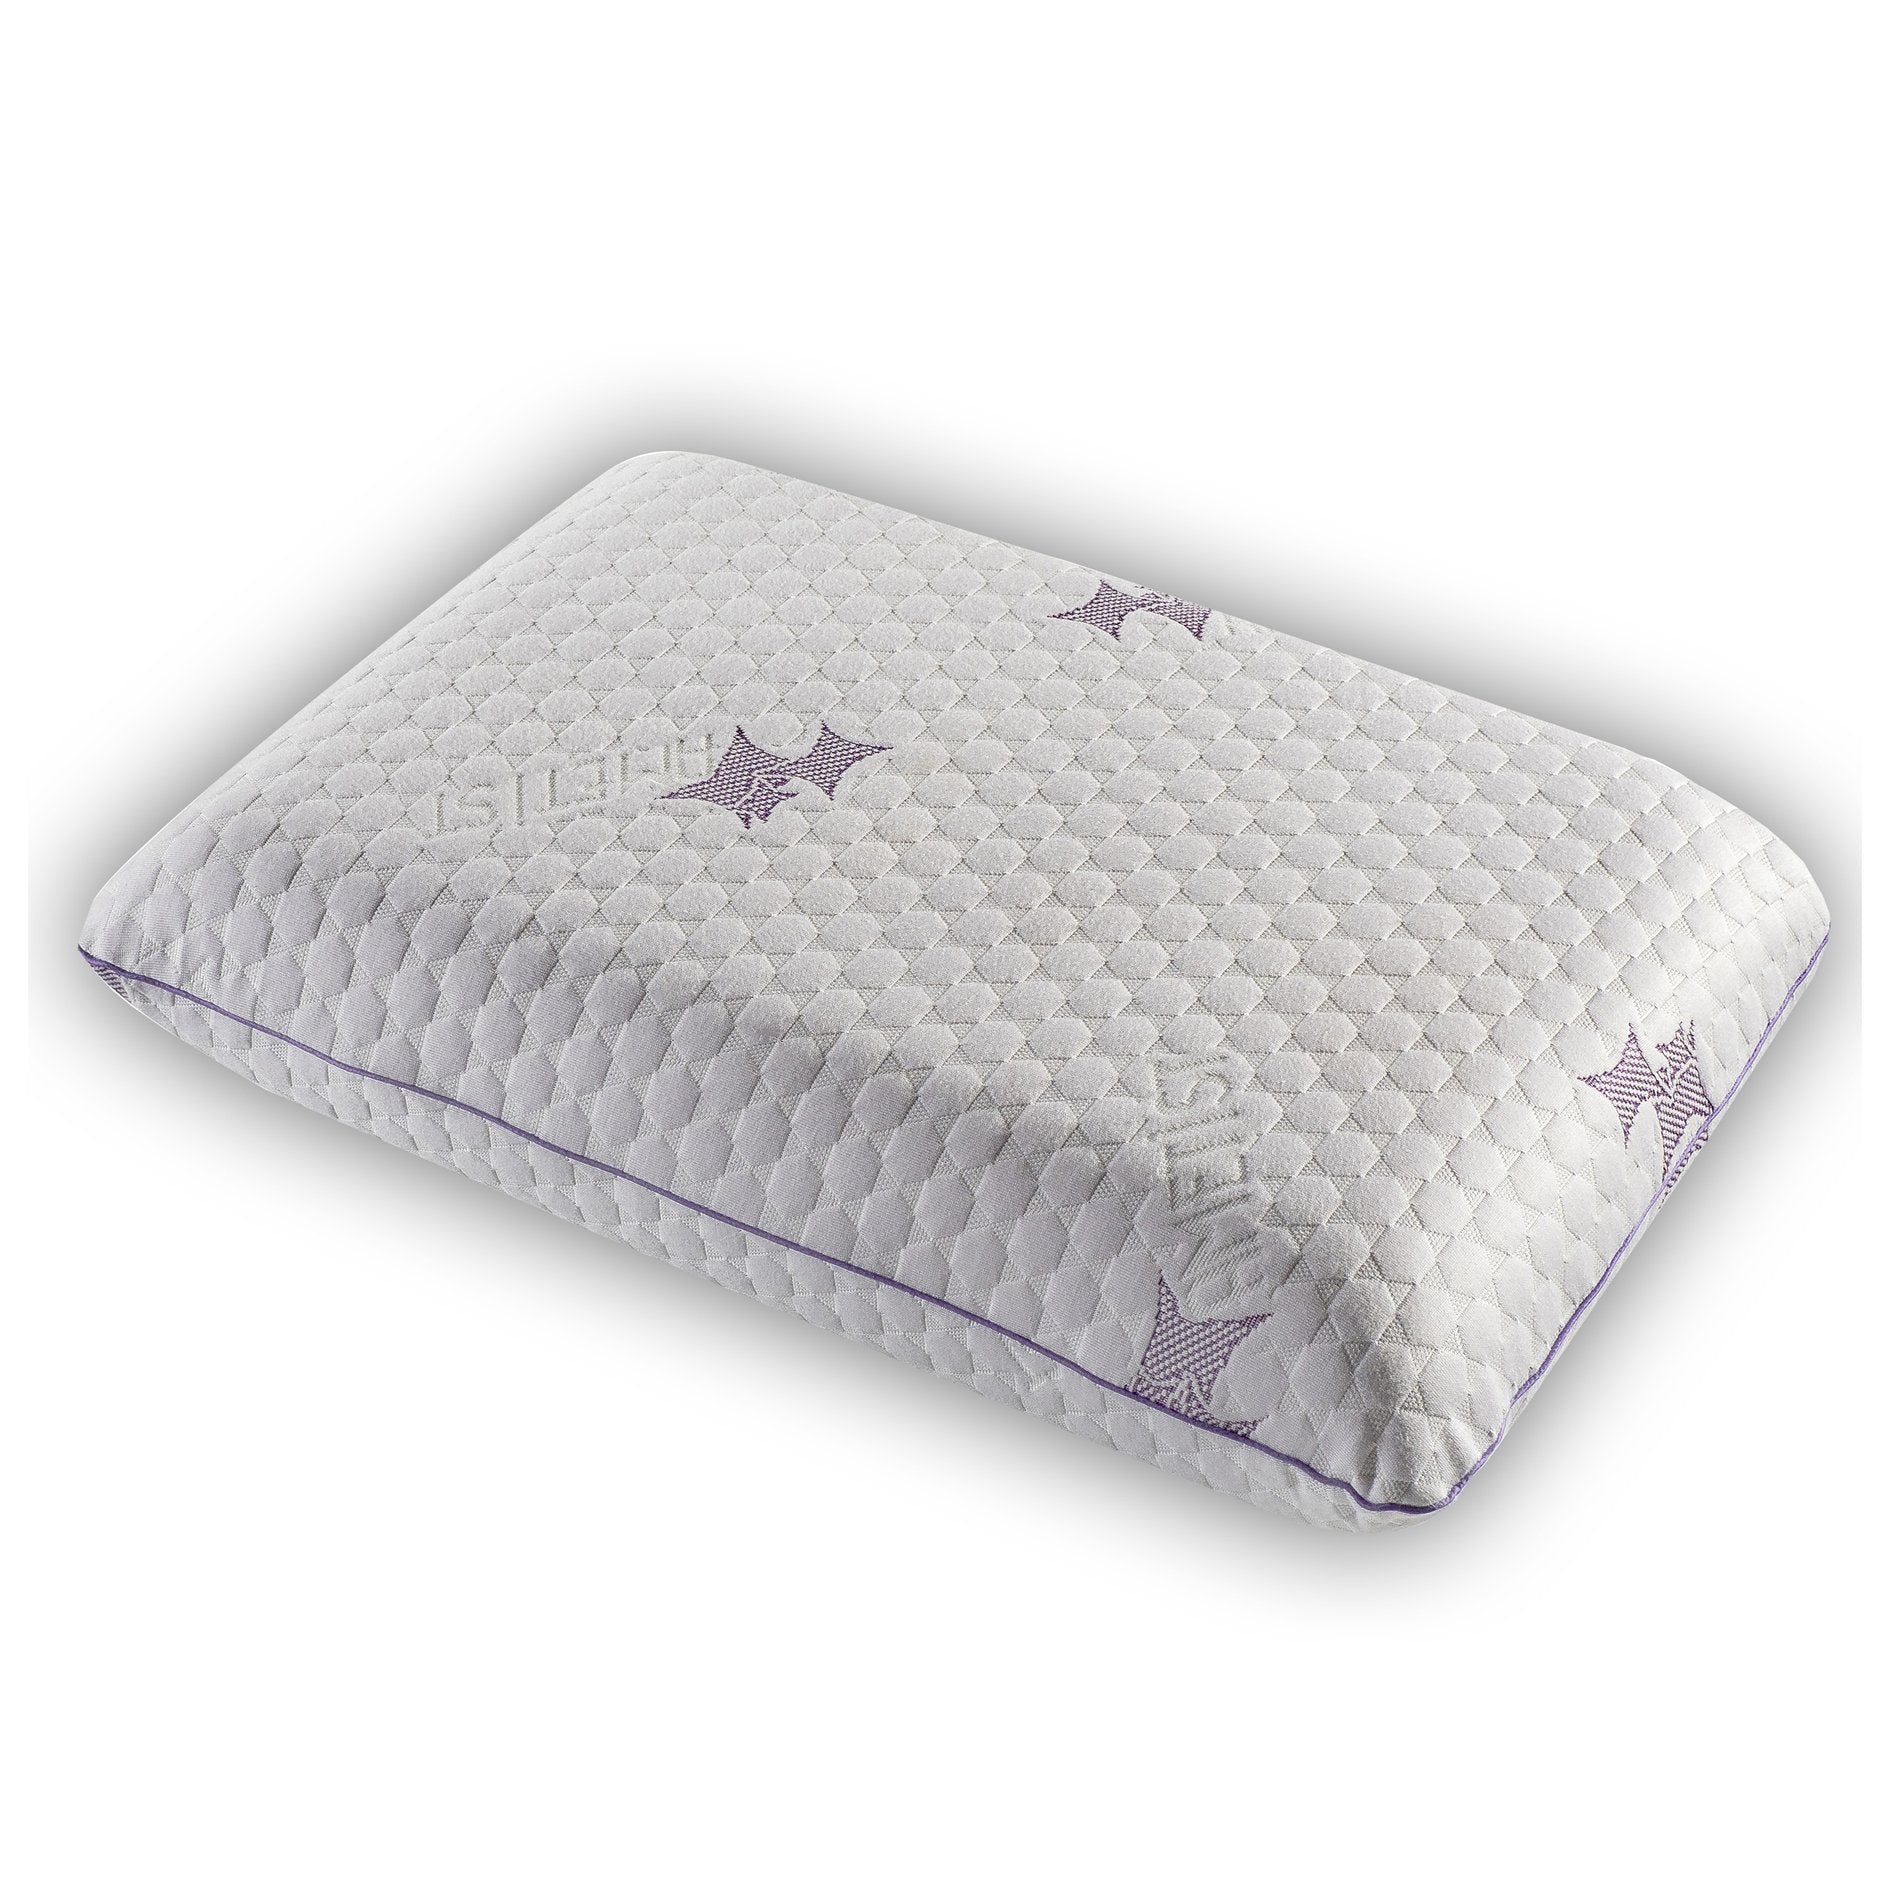 Ametist Neck Support Serene Memory Foam Standard Pillow - Decorotika